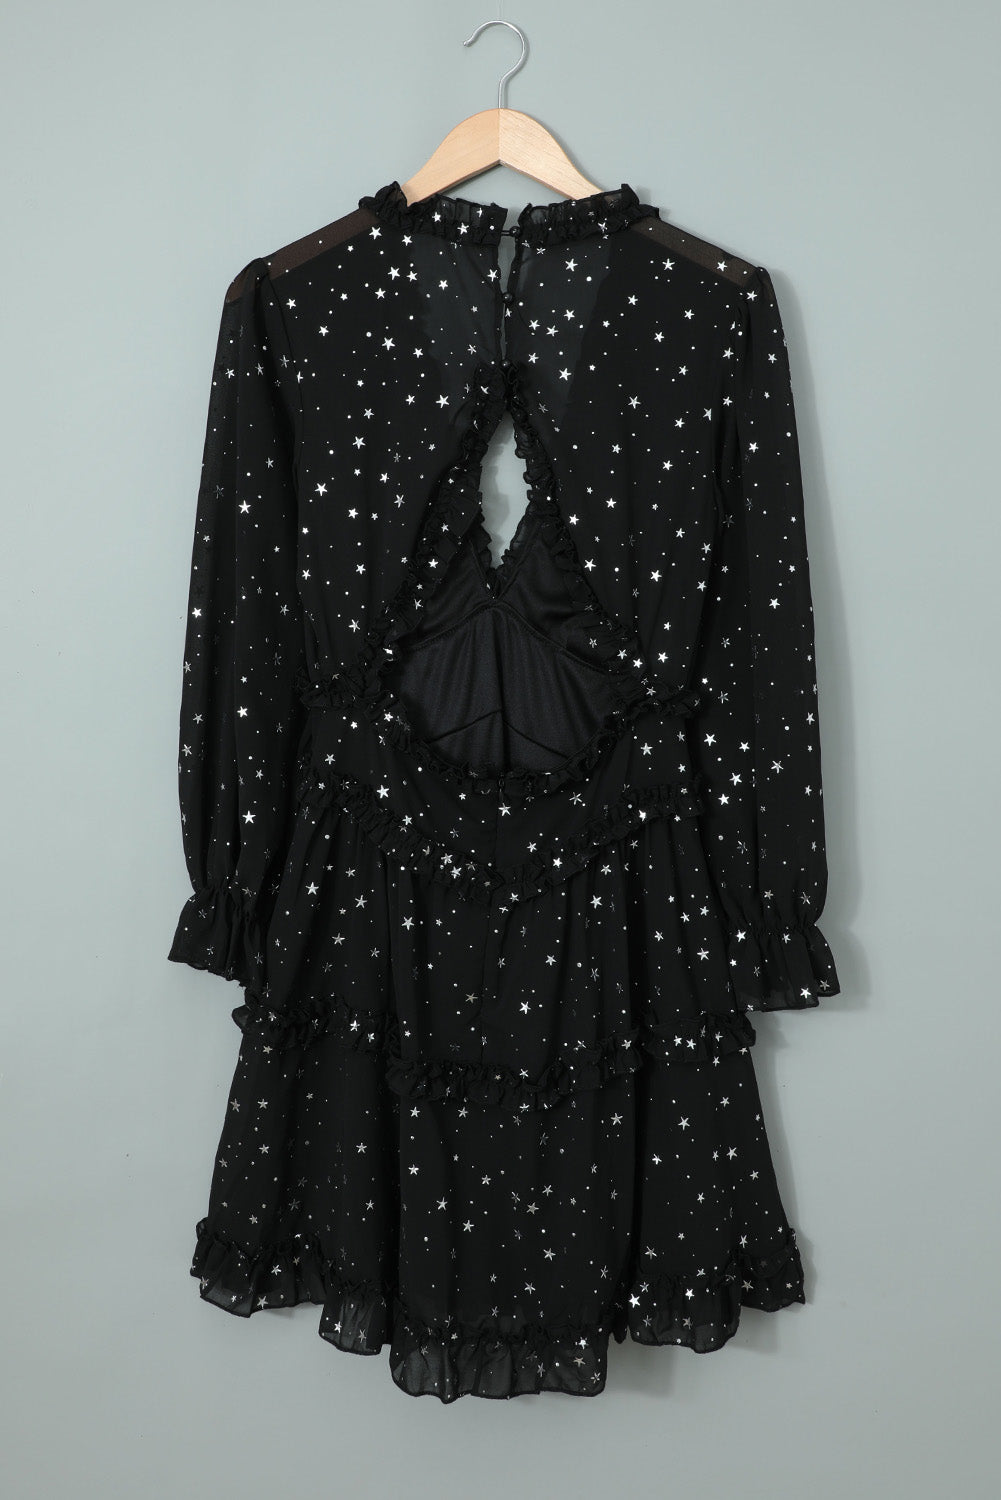 Black Glitter Stars V Neck Backless Long Sleeve Ruffle Mini Dress